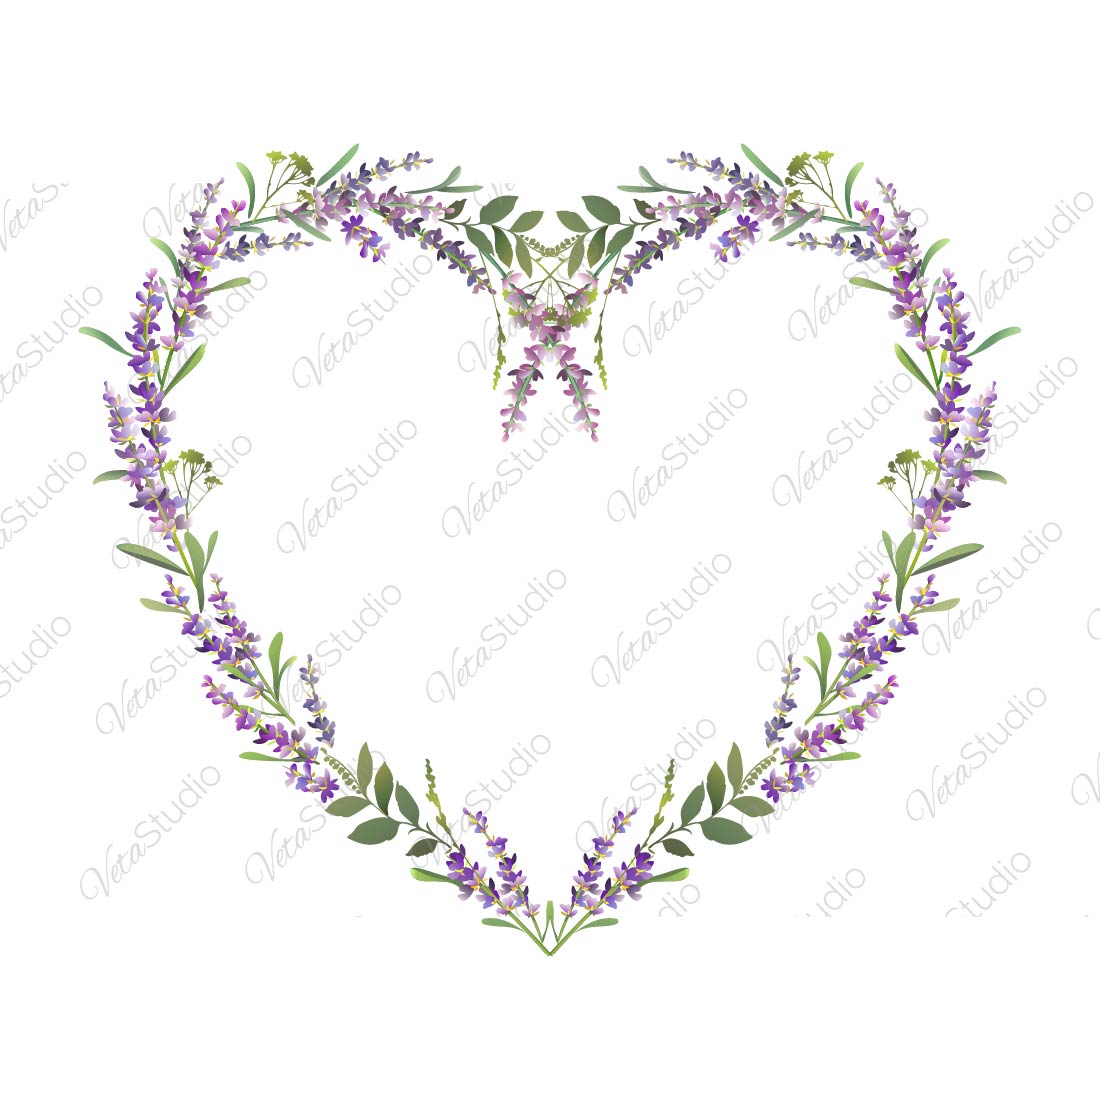 Lavender Heart Lavender Frame - Only 6$ cover image.